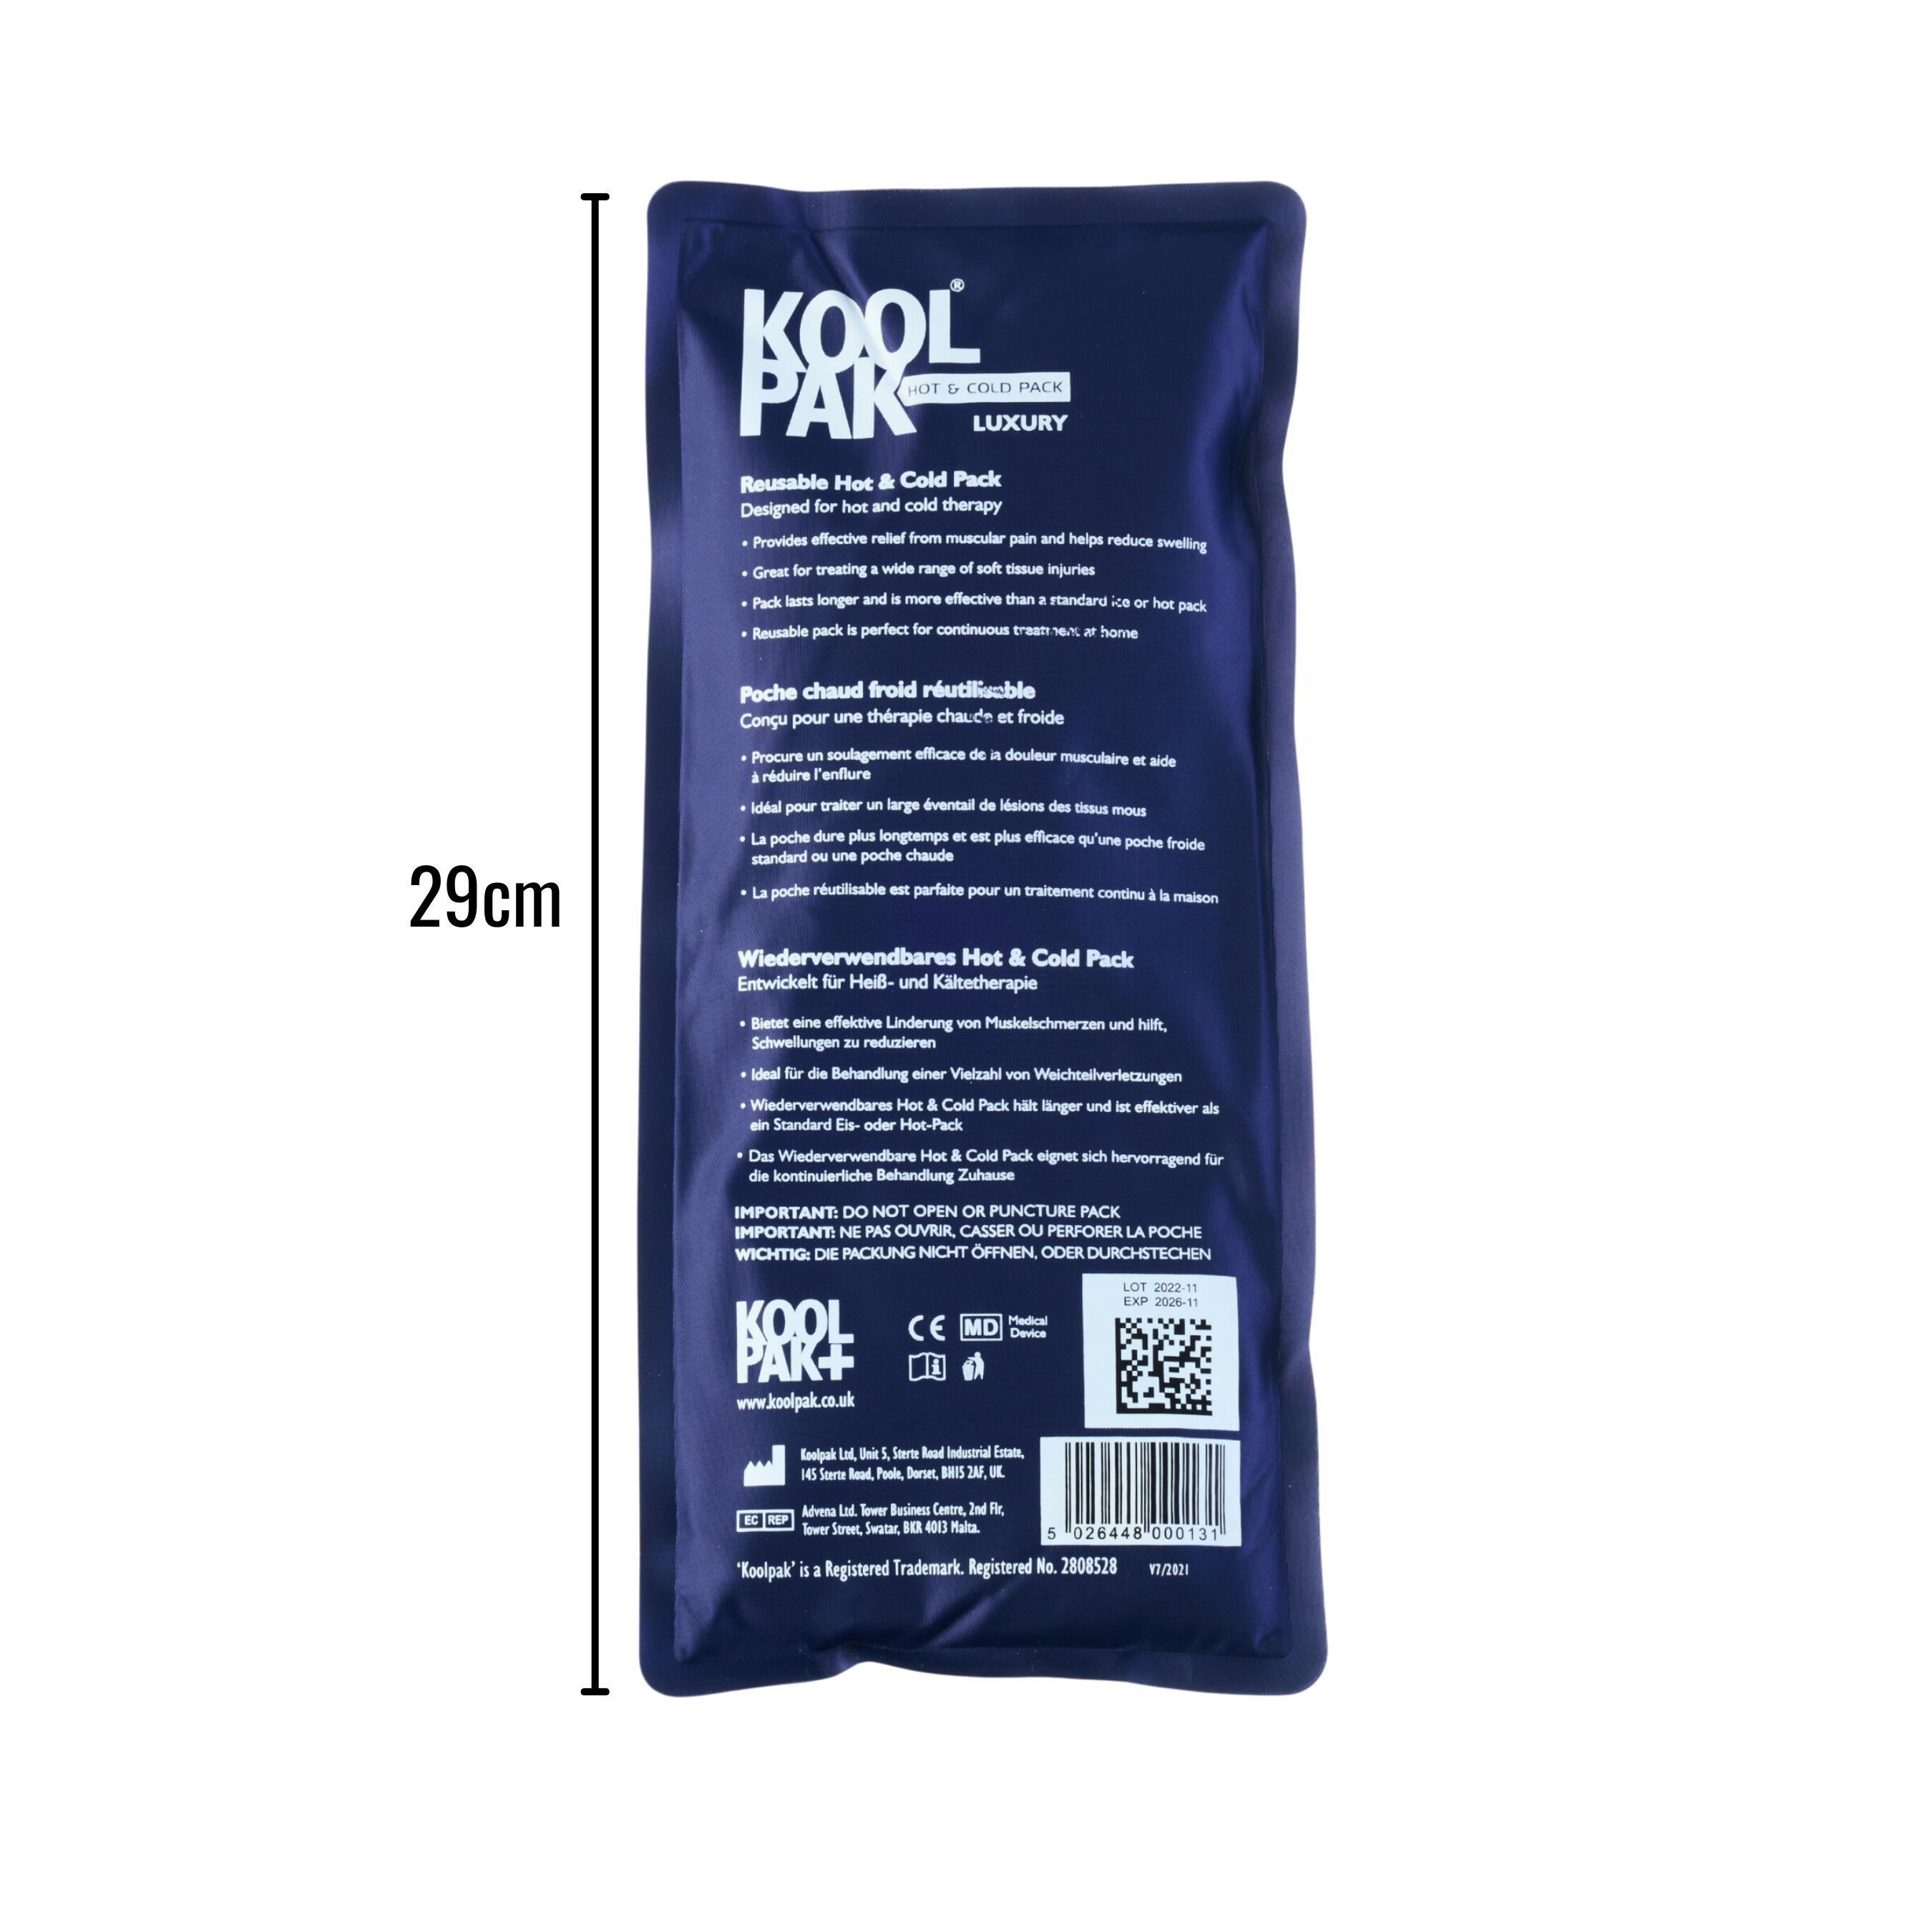 Koolpak Luxury Reusable Hot & Cold Pack - 12 x 29cm Pack of 10 5/6